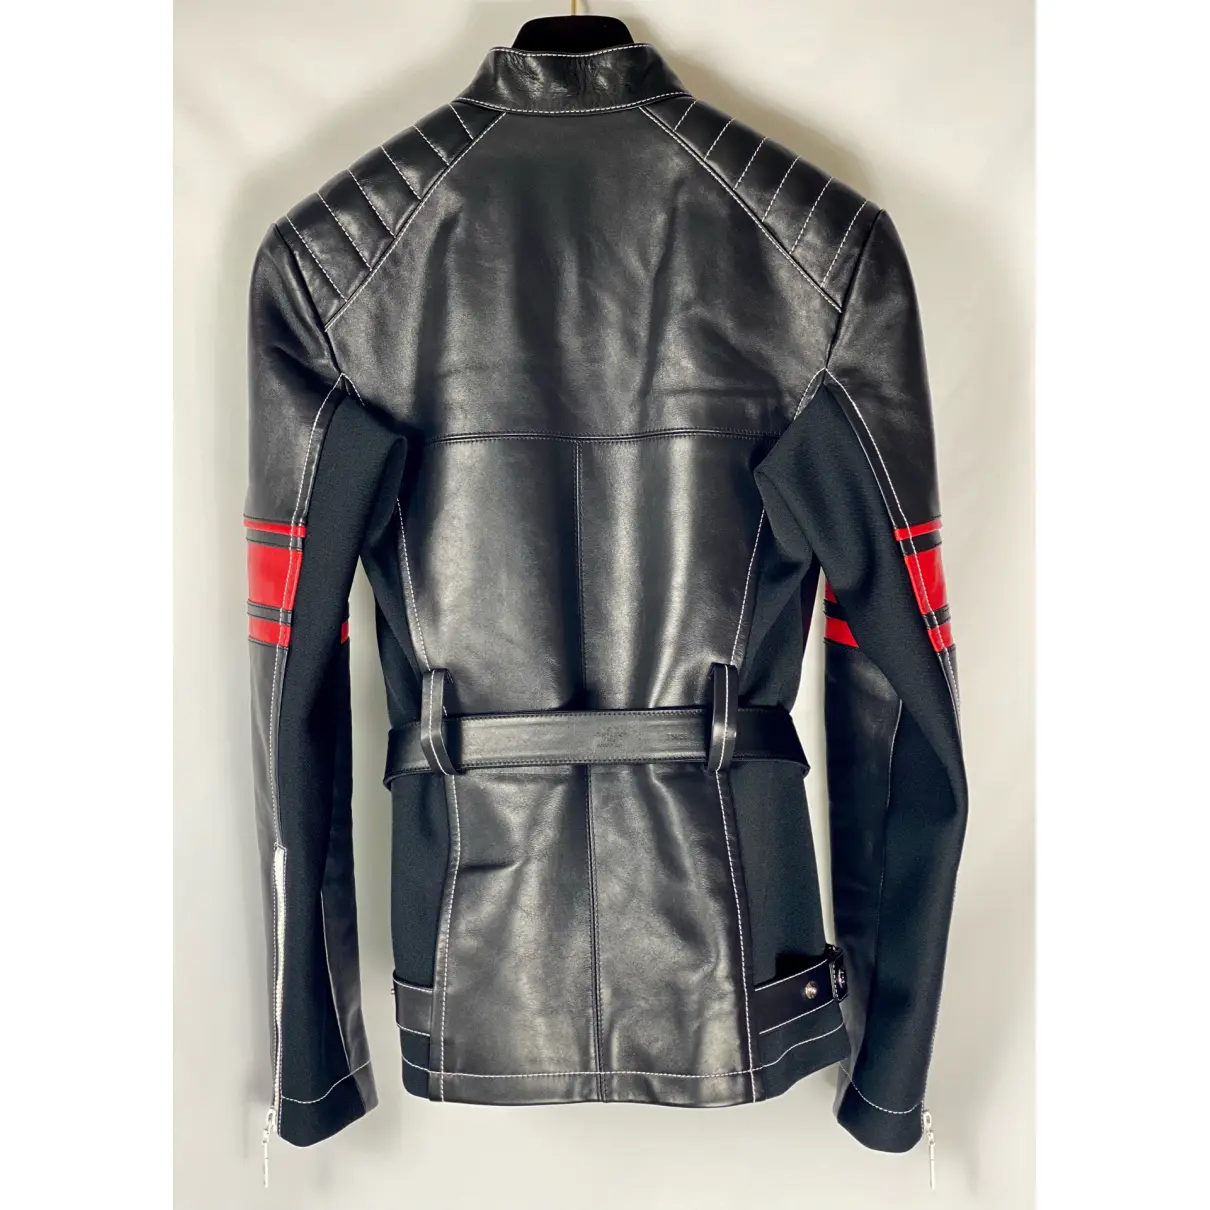 Buy Louis Vuitton Leather biker jacket online